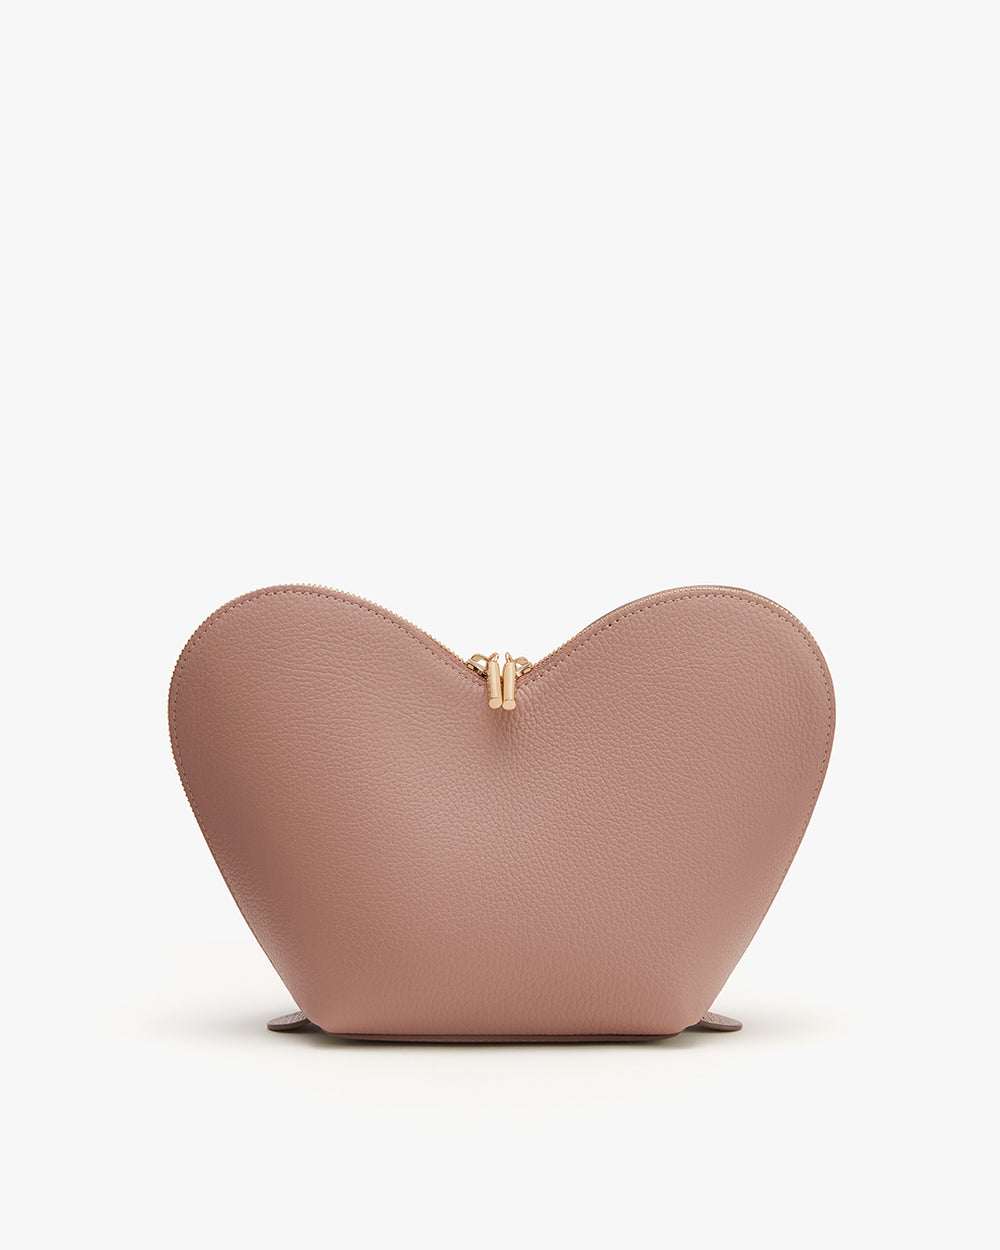 Heart-shaped handbag with a zipper on top.